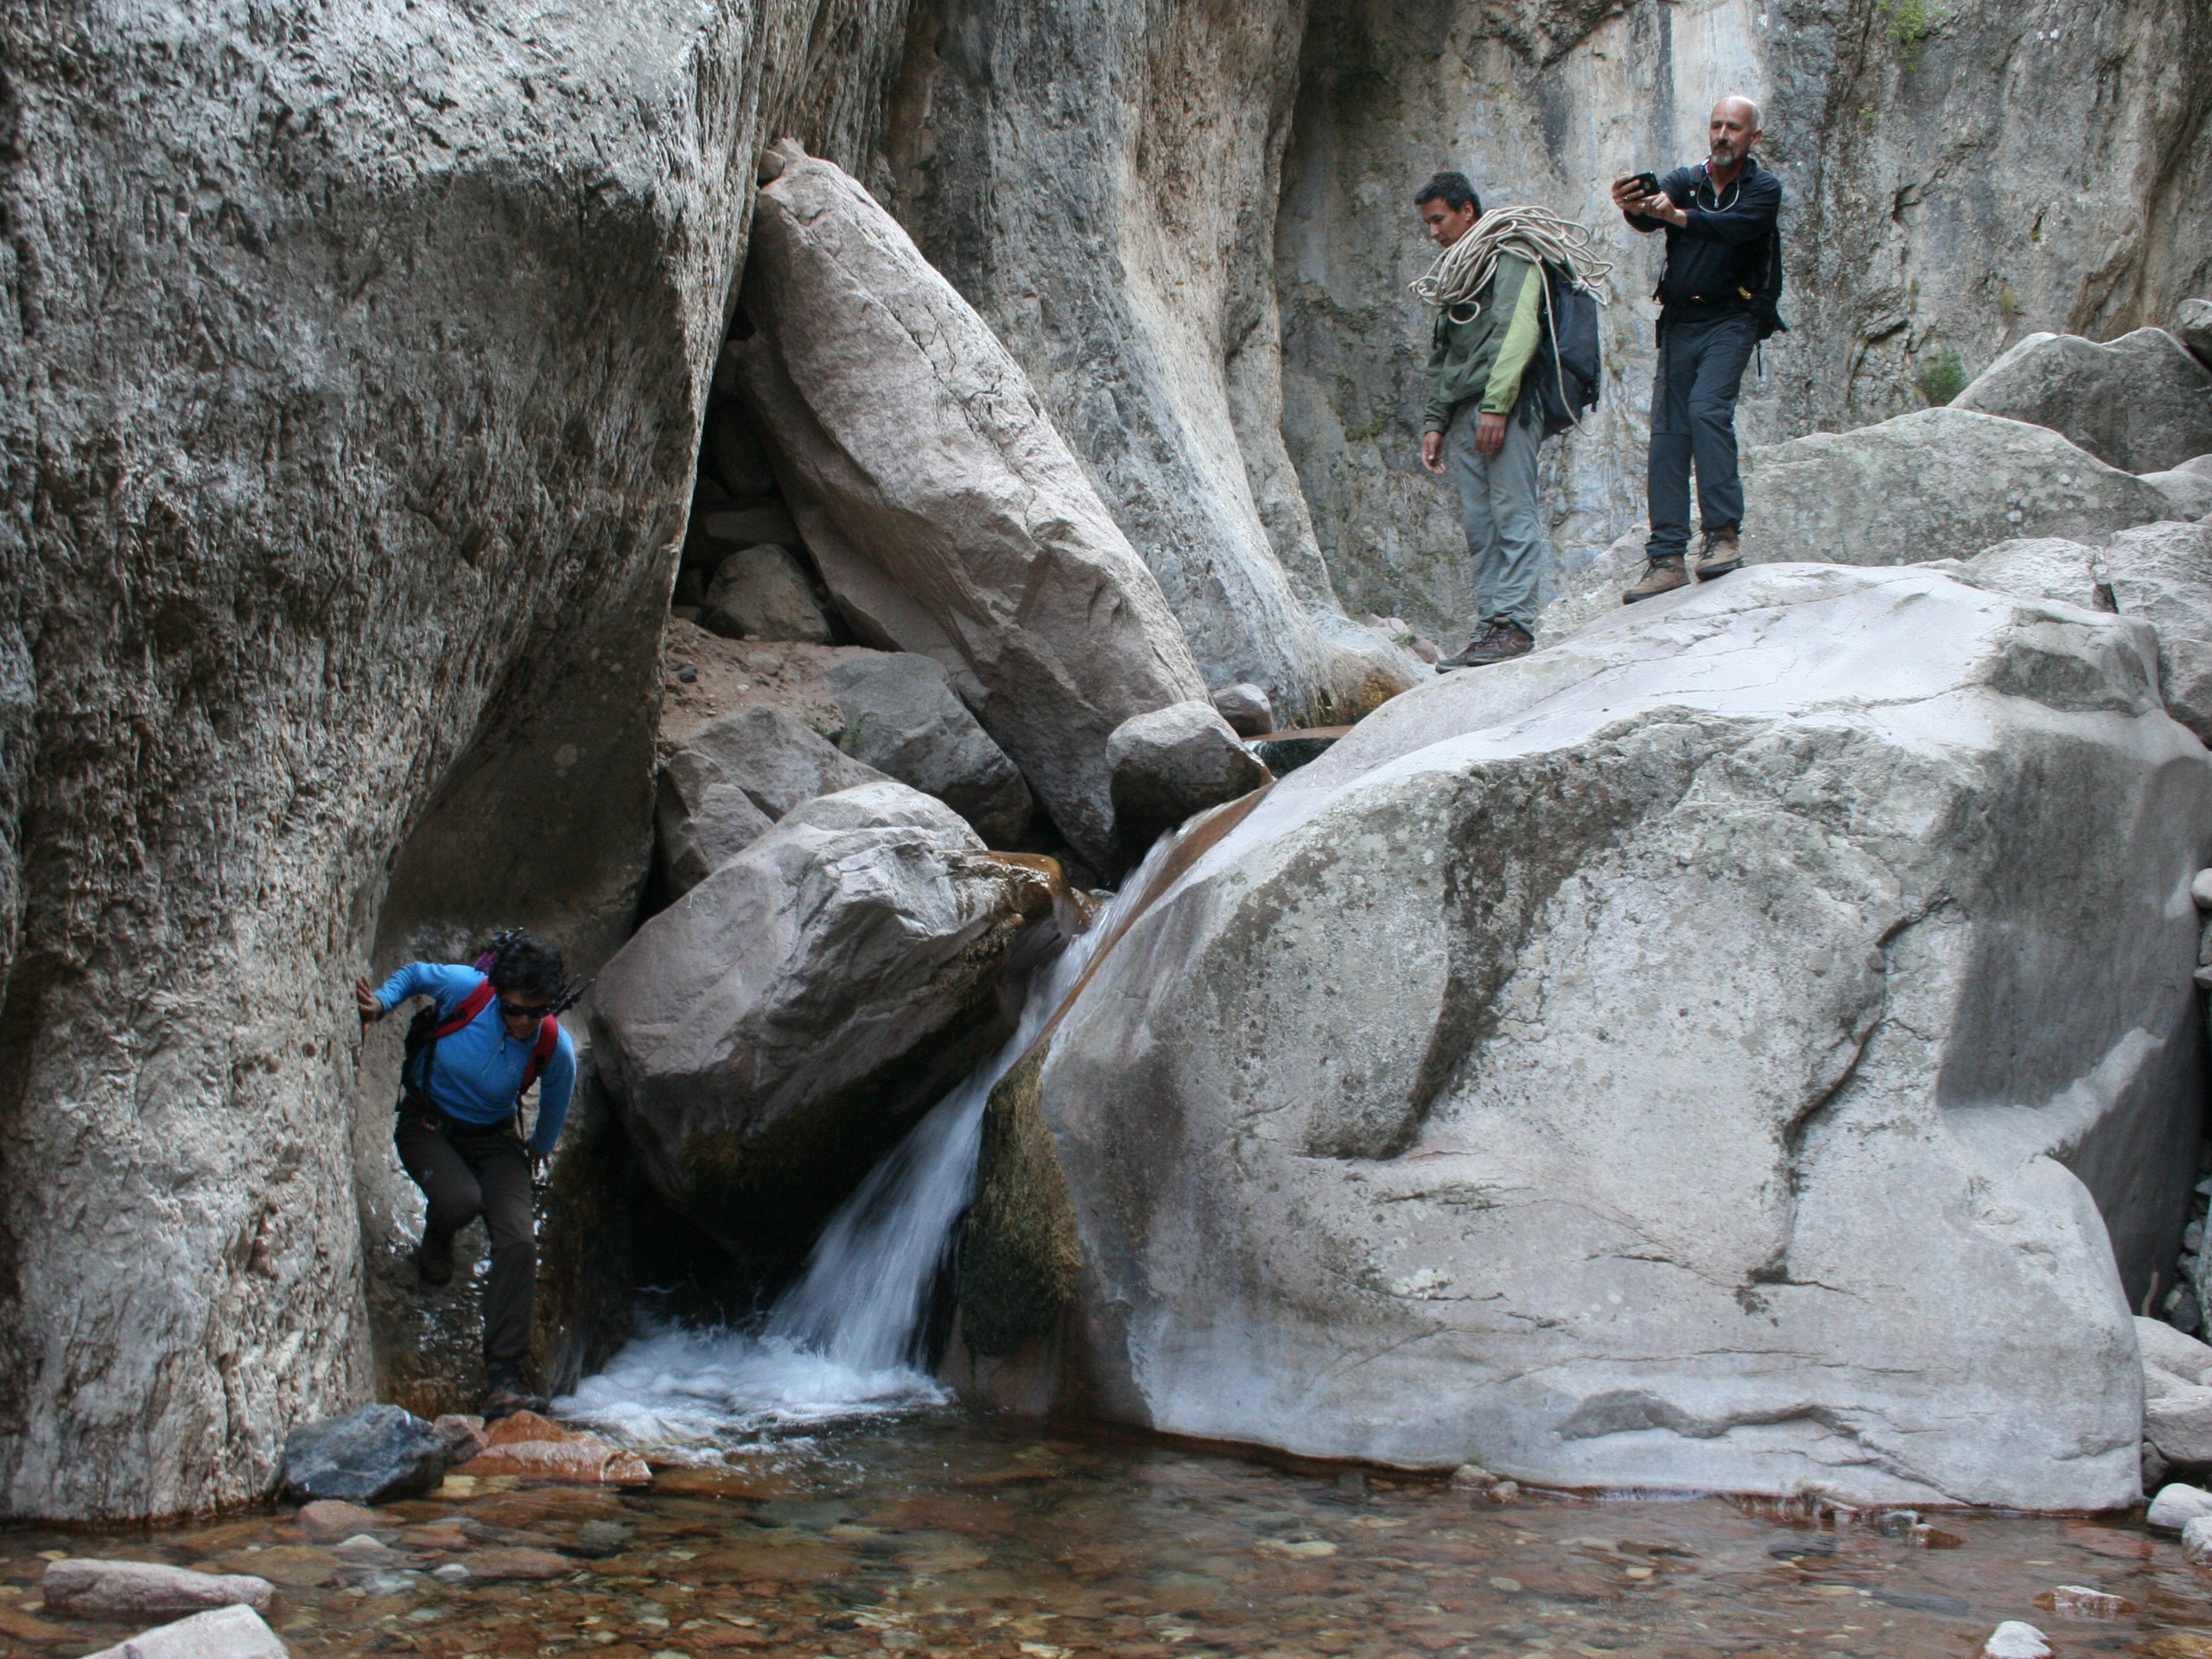 Crossing the small waterfall in Uzbekistan